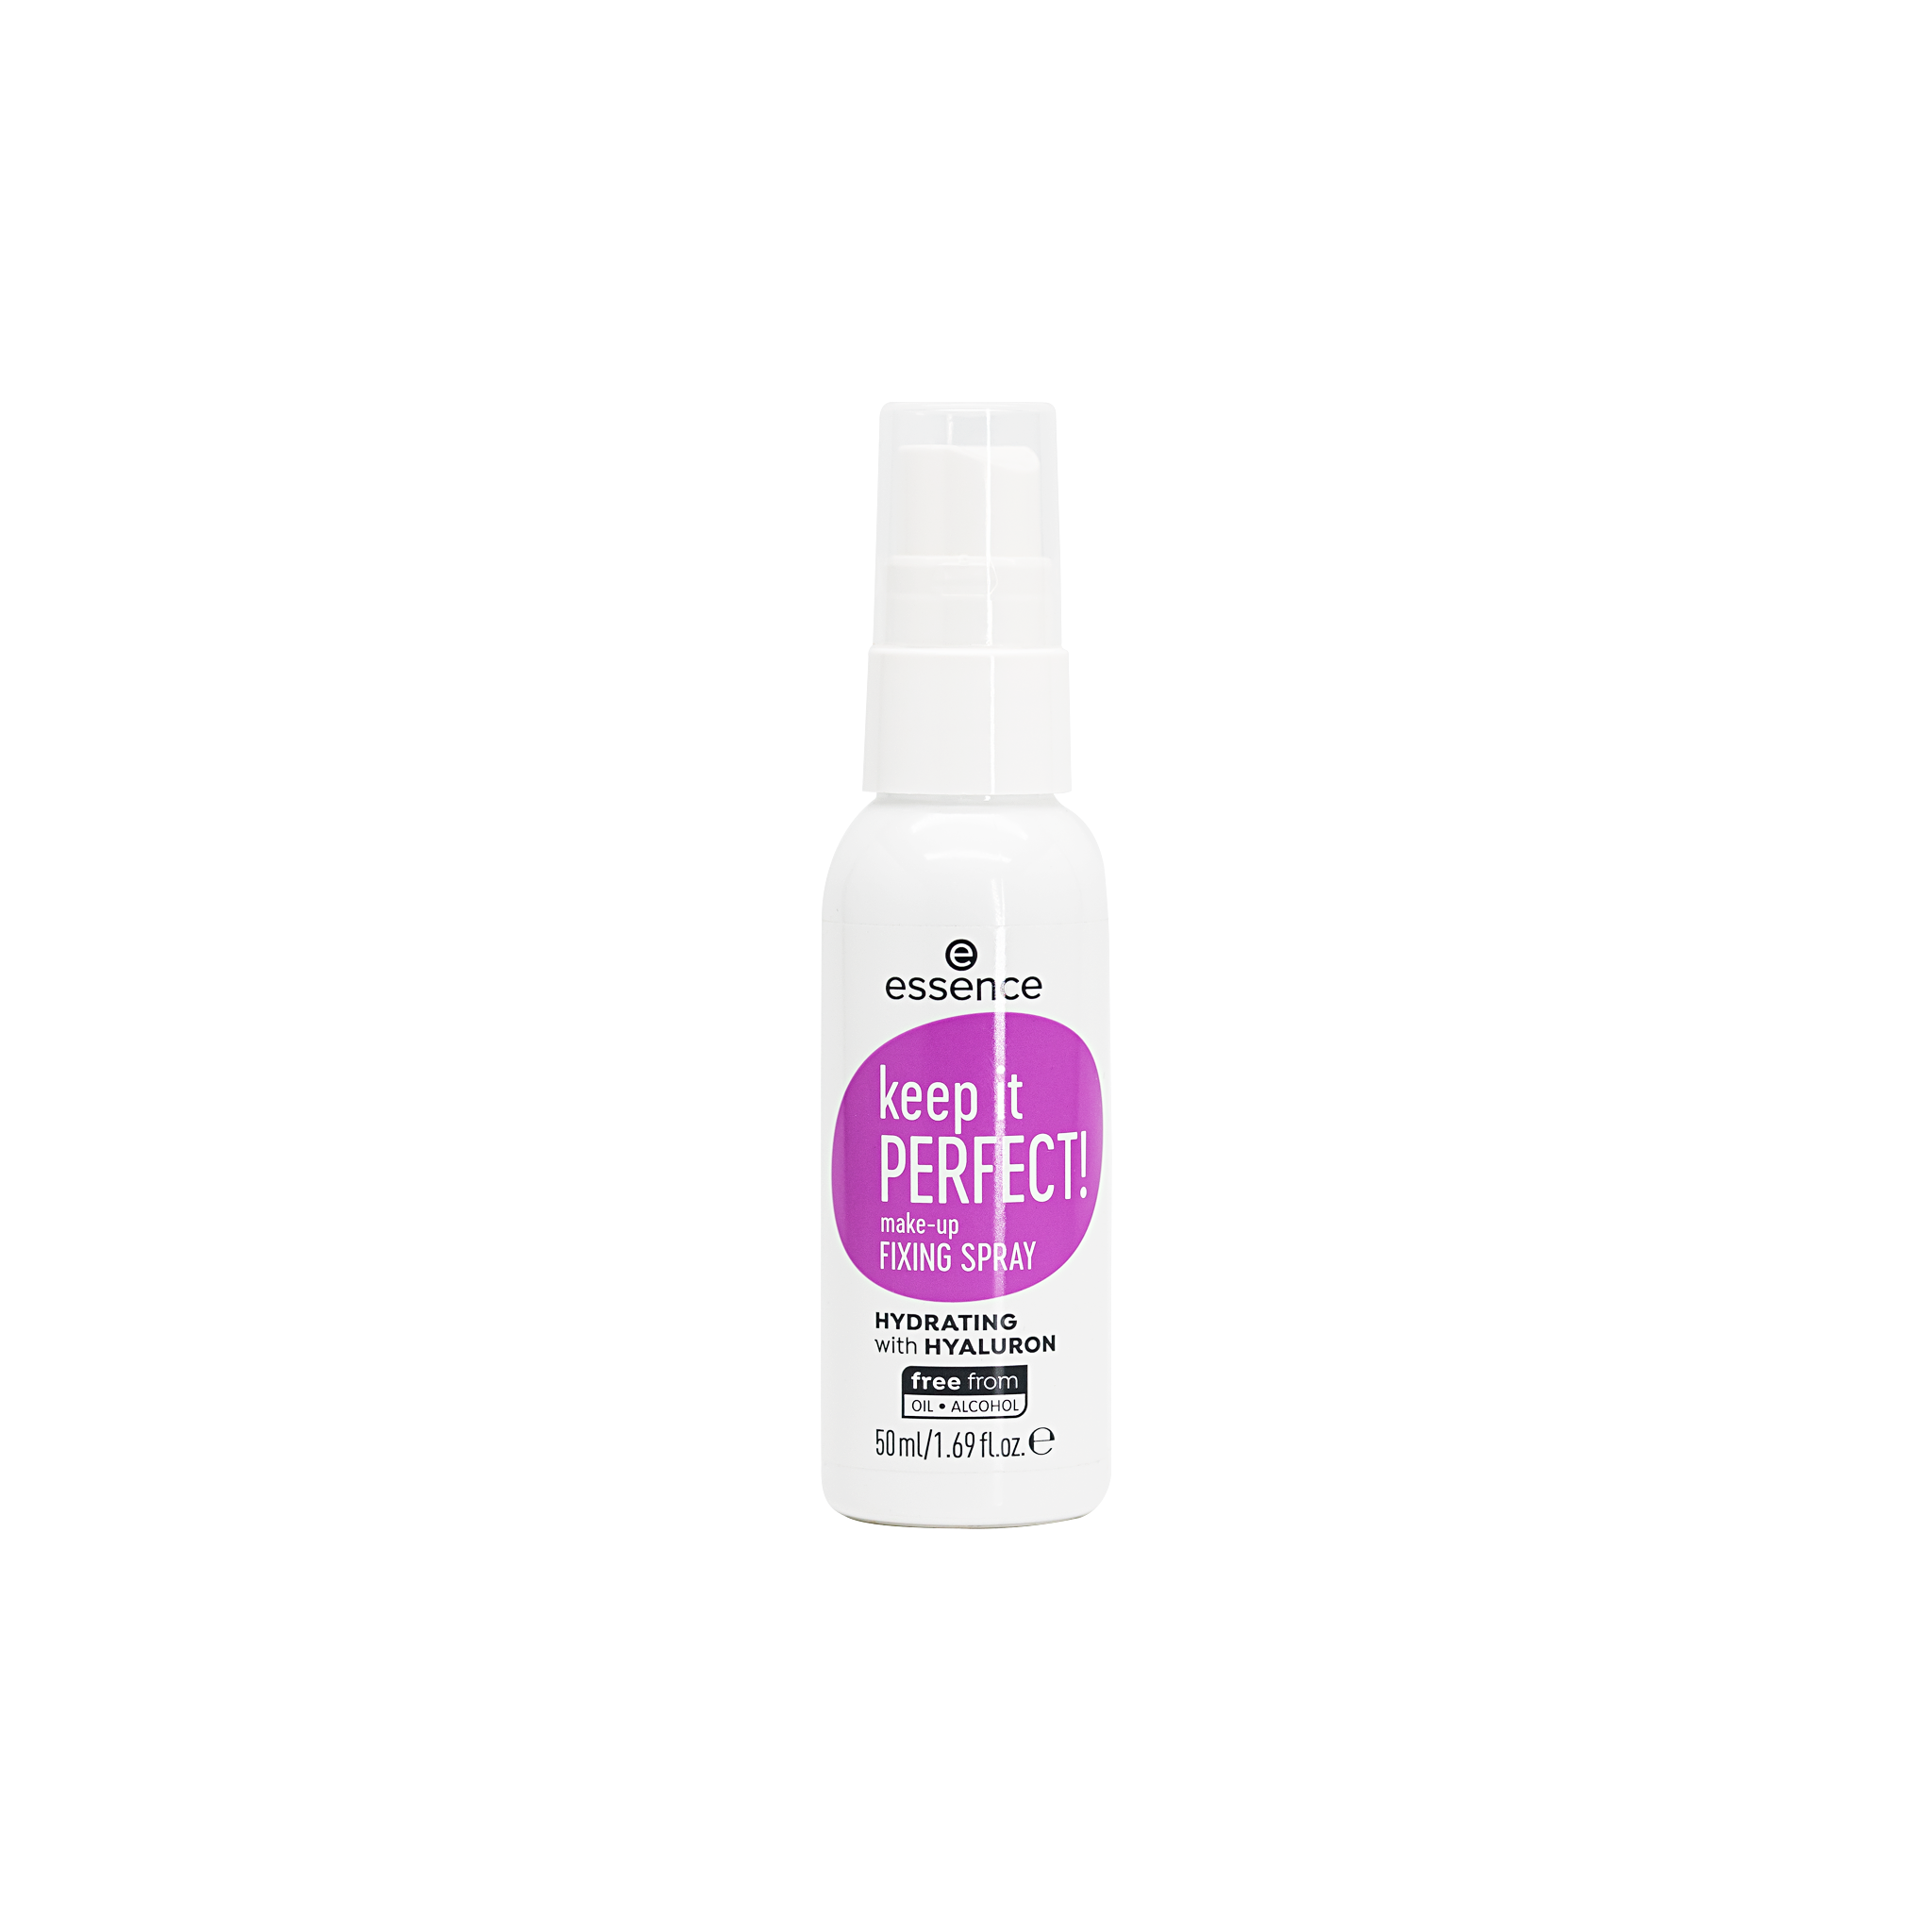 Essence - Keep It Perfect! Make-Up Fixing Spray - 50ml